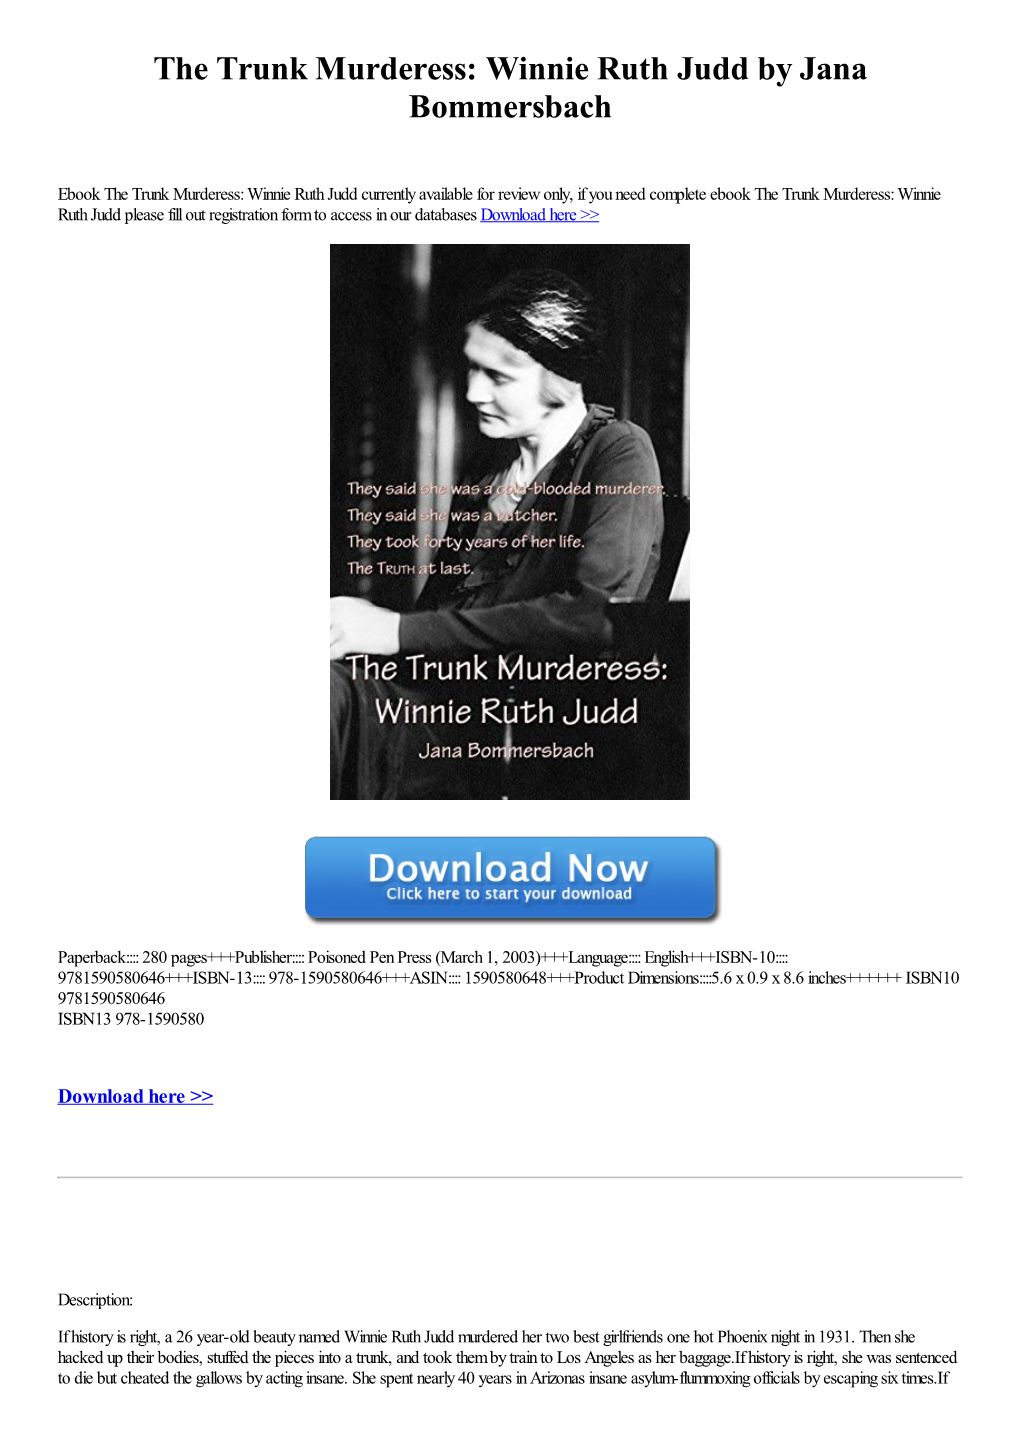 The Trunk Murderess: Winnie Ruth Judd by Jana Bommersbach